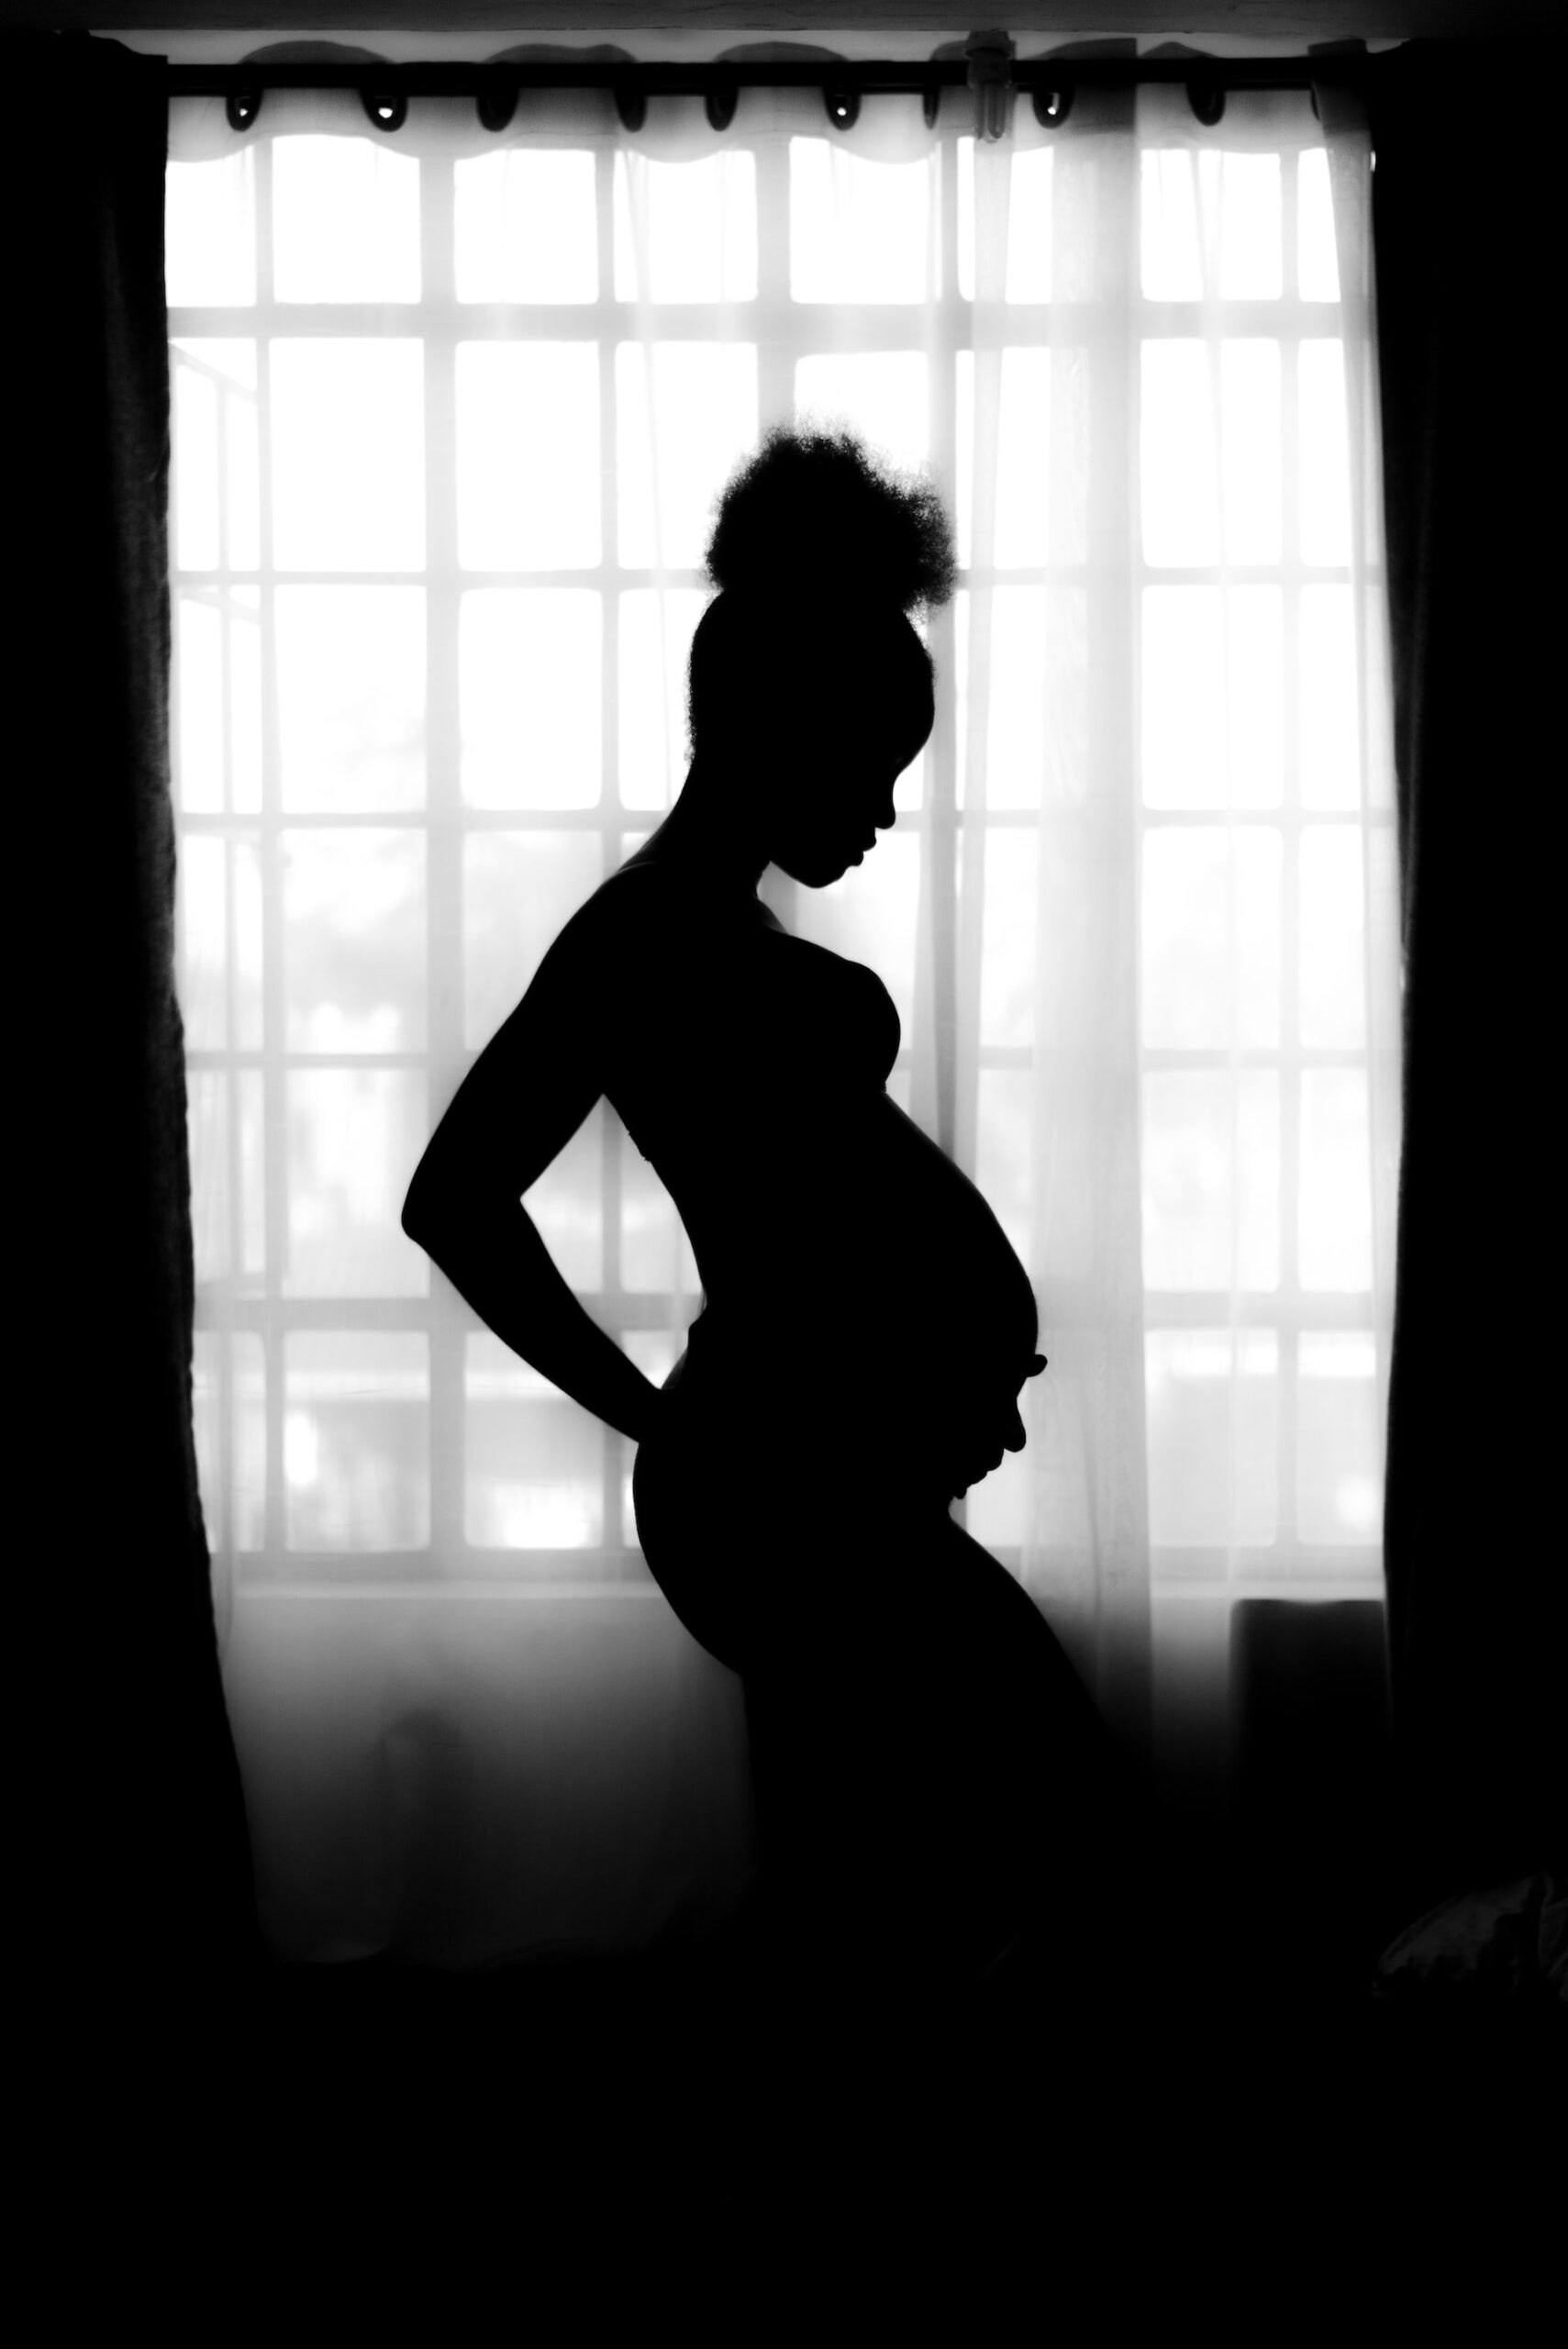 5 Surprising Benefits of Pregnancy